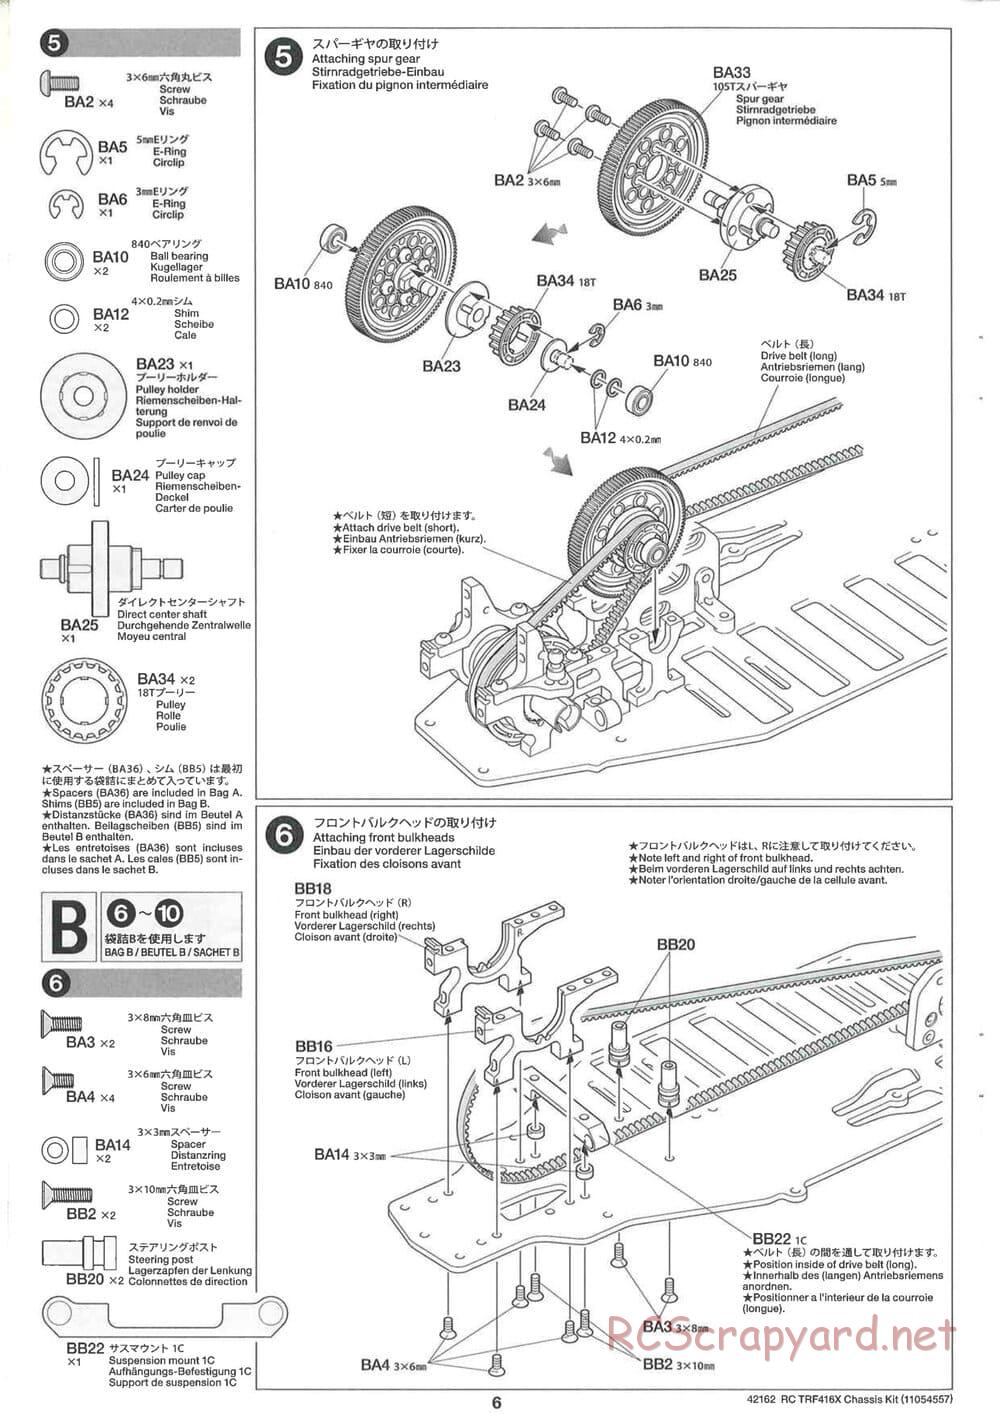 Tamiya - TRF416X Chassis - Manual - Page 6